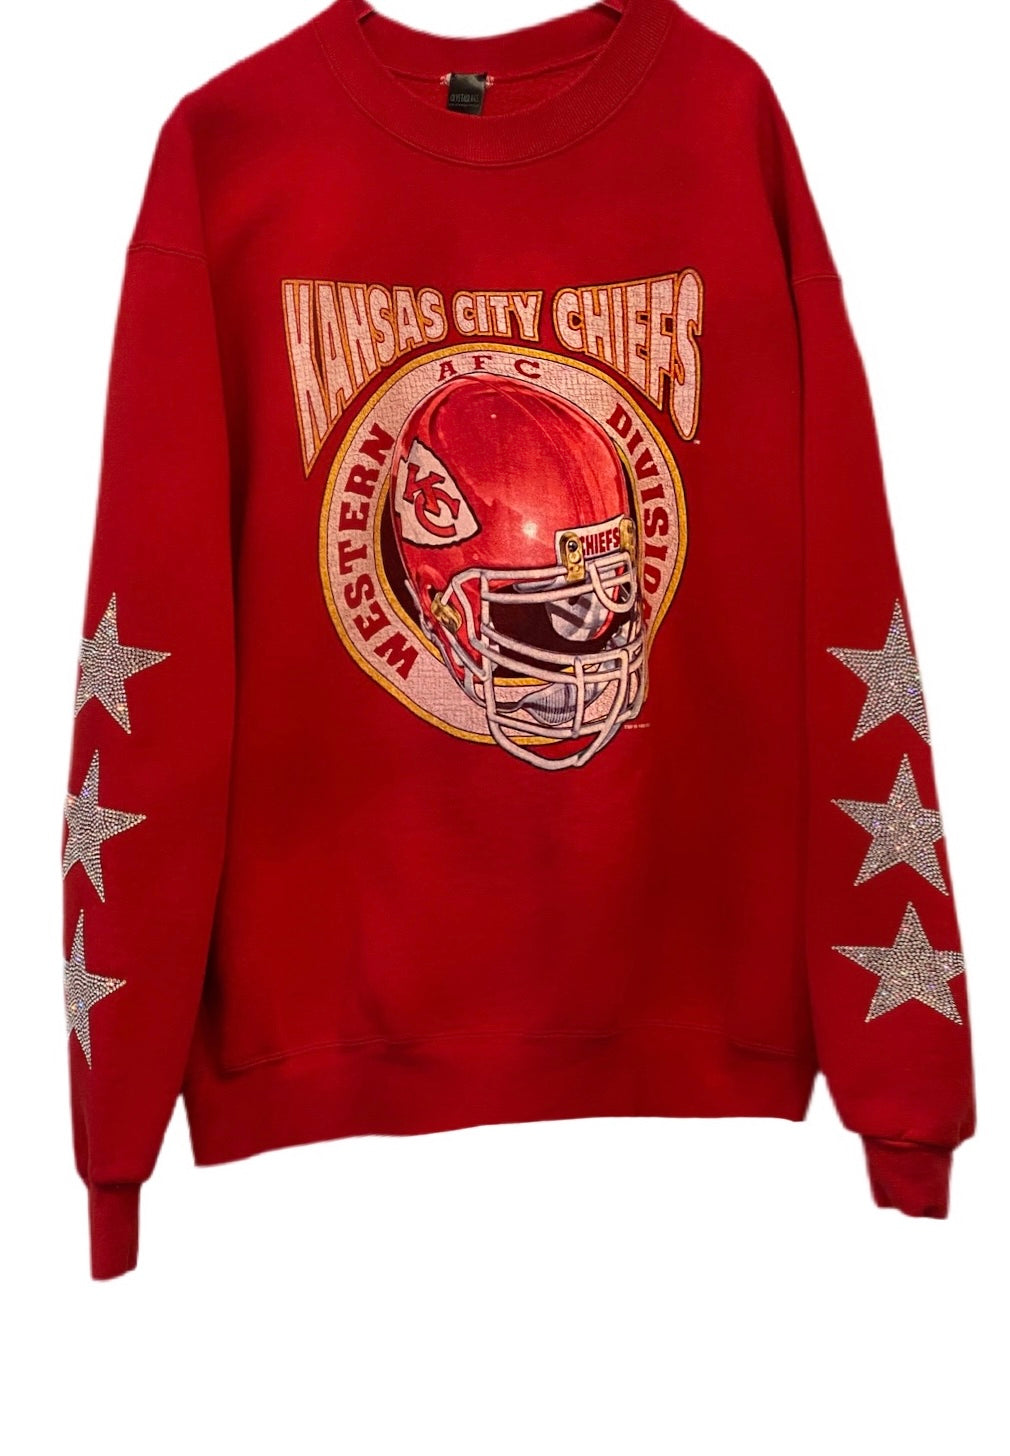 Kansas City Chiefs, NFL One of a KIND Vintage Sweatshirt with Three Crystal Star Design